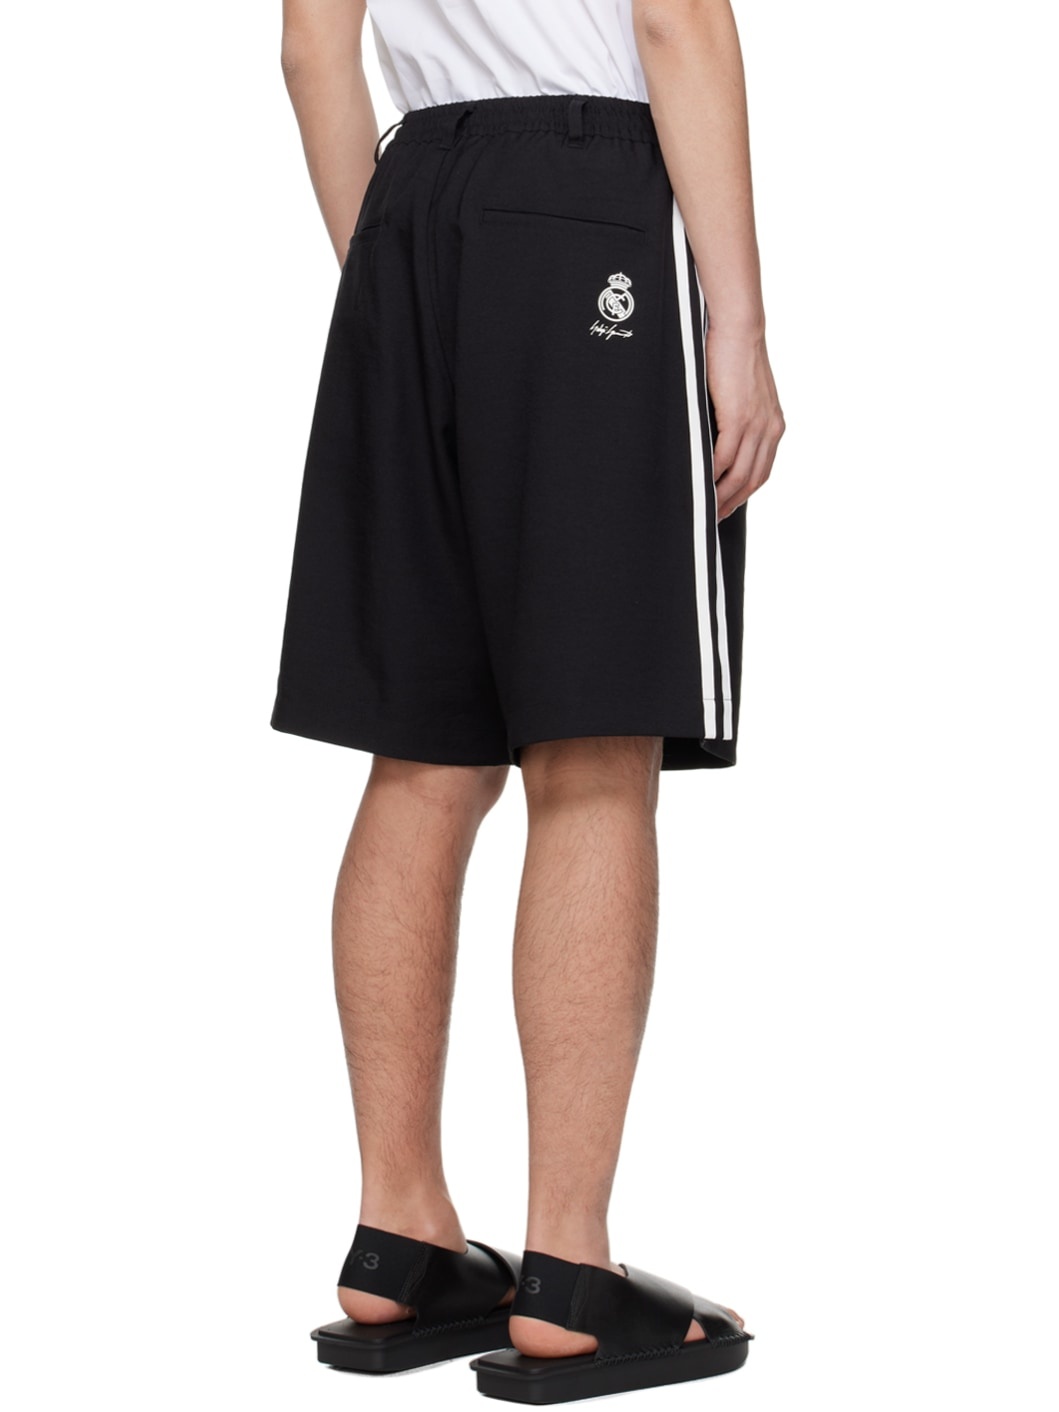 Black 3SSP UNI Shorts - 3